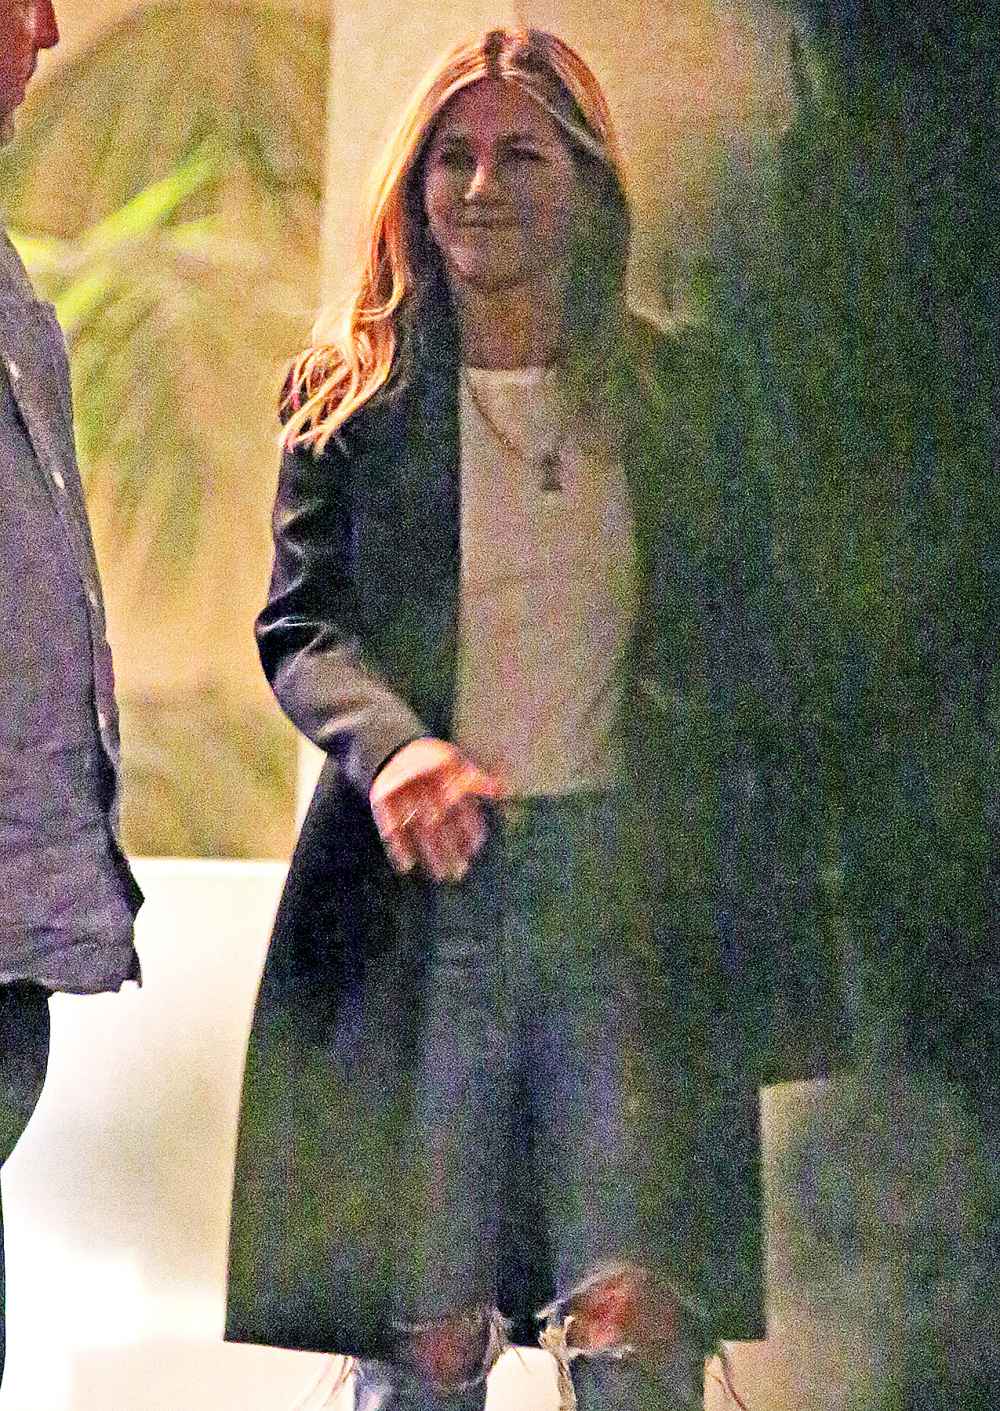 Jennifer Aniston smiling no ring